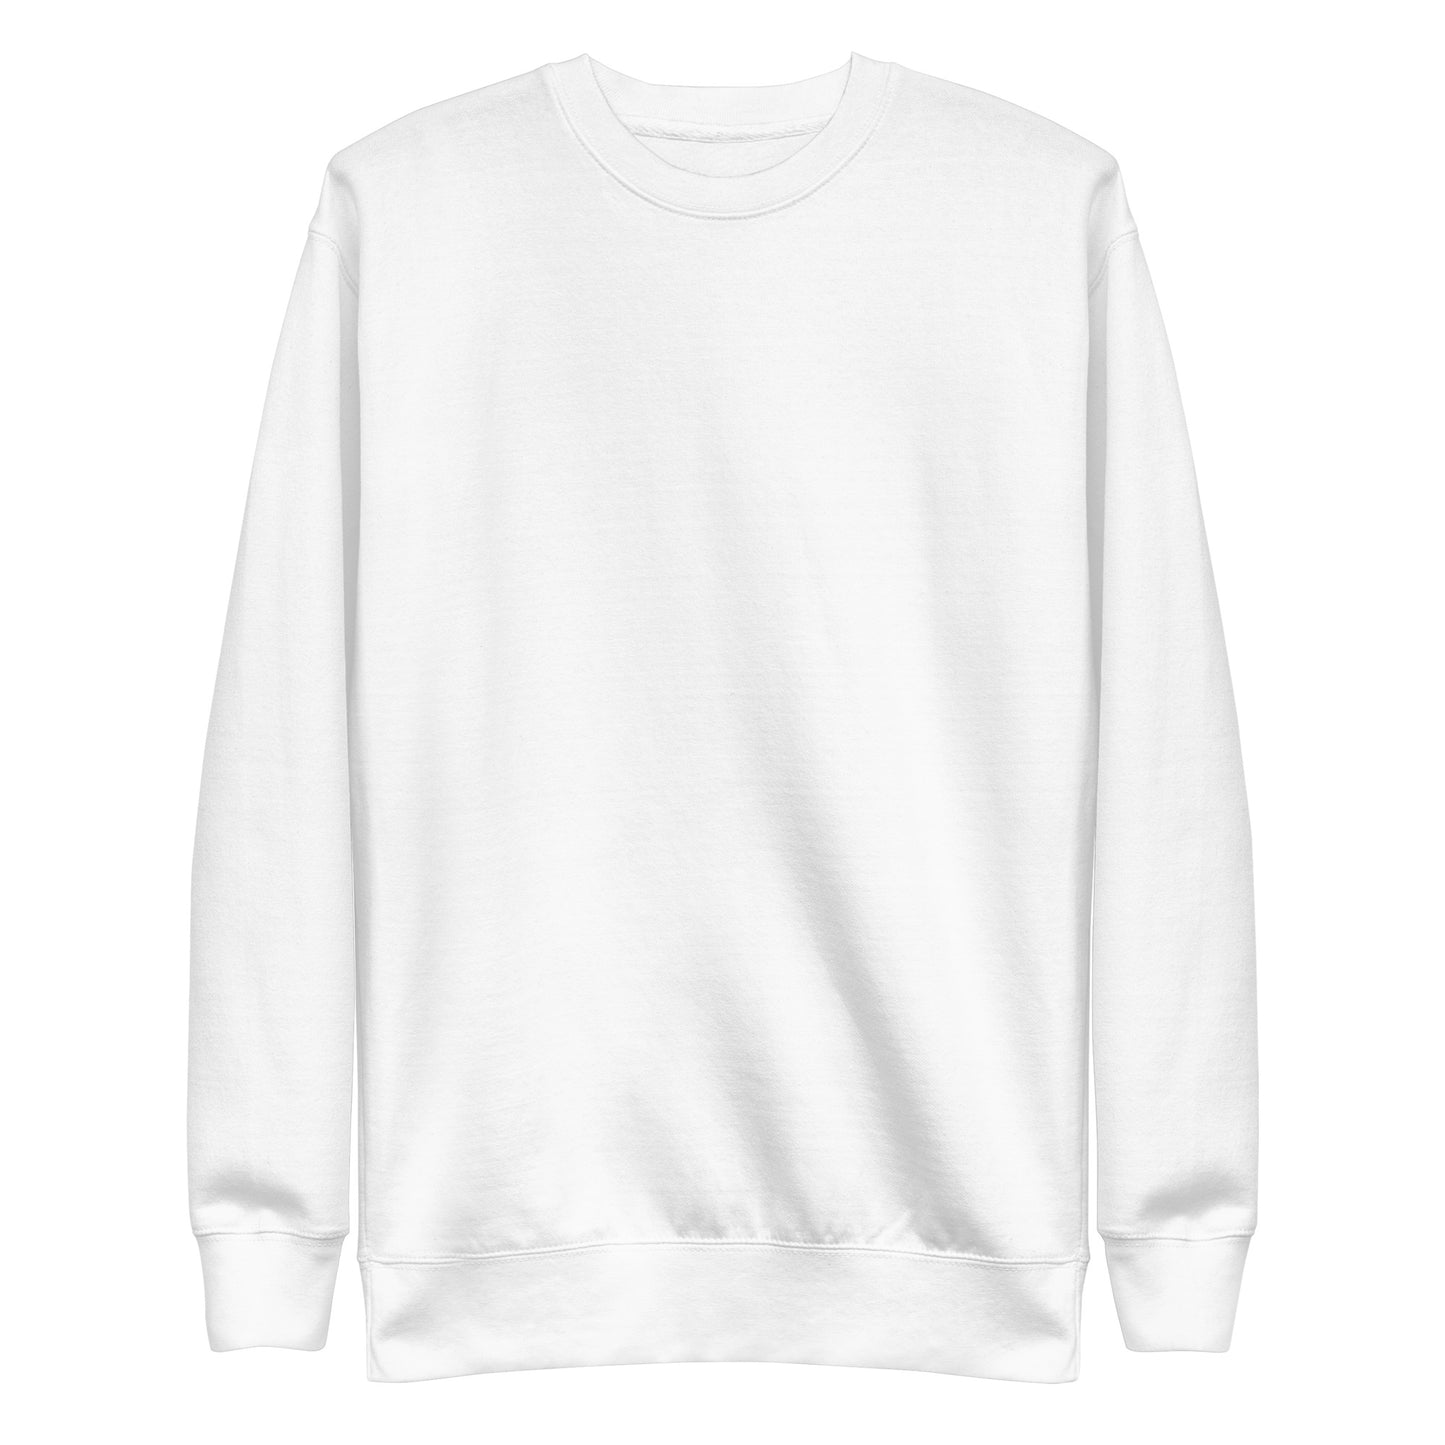 Medusa (B&W) - Unisex Premium Sweatshirt